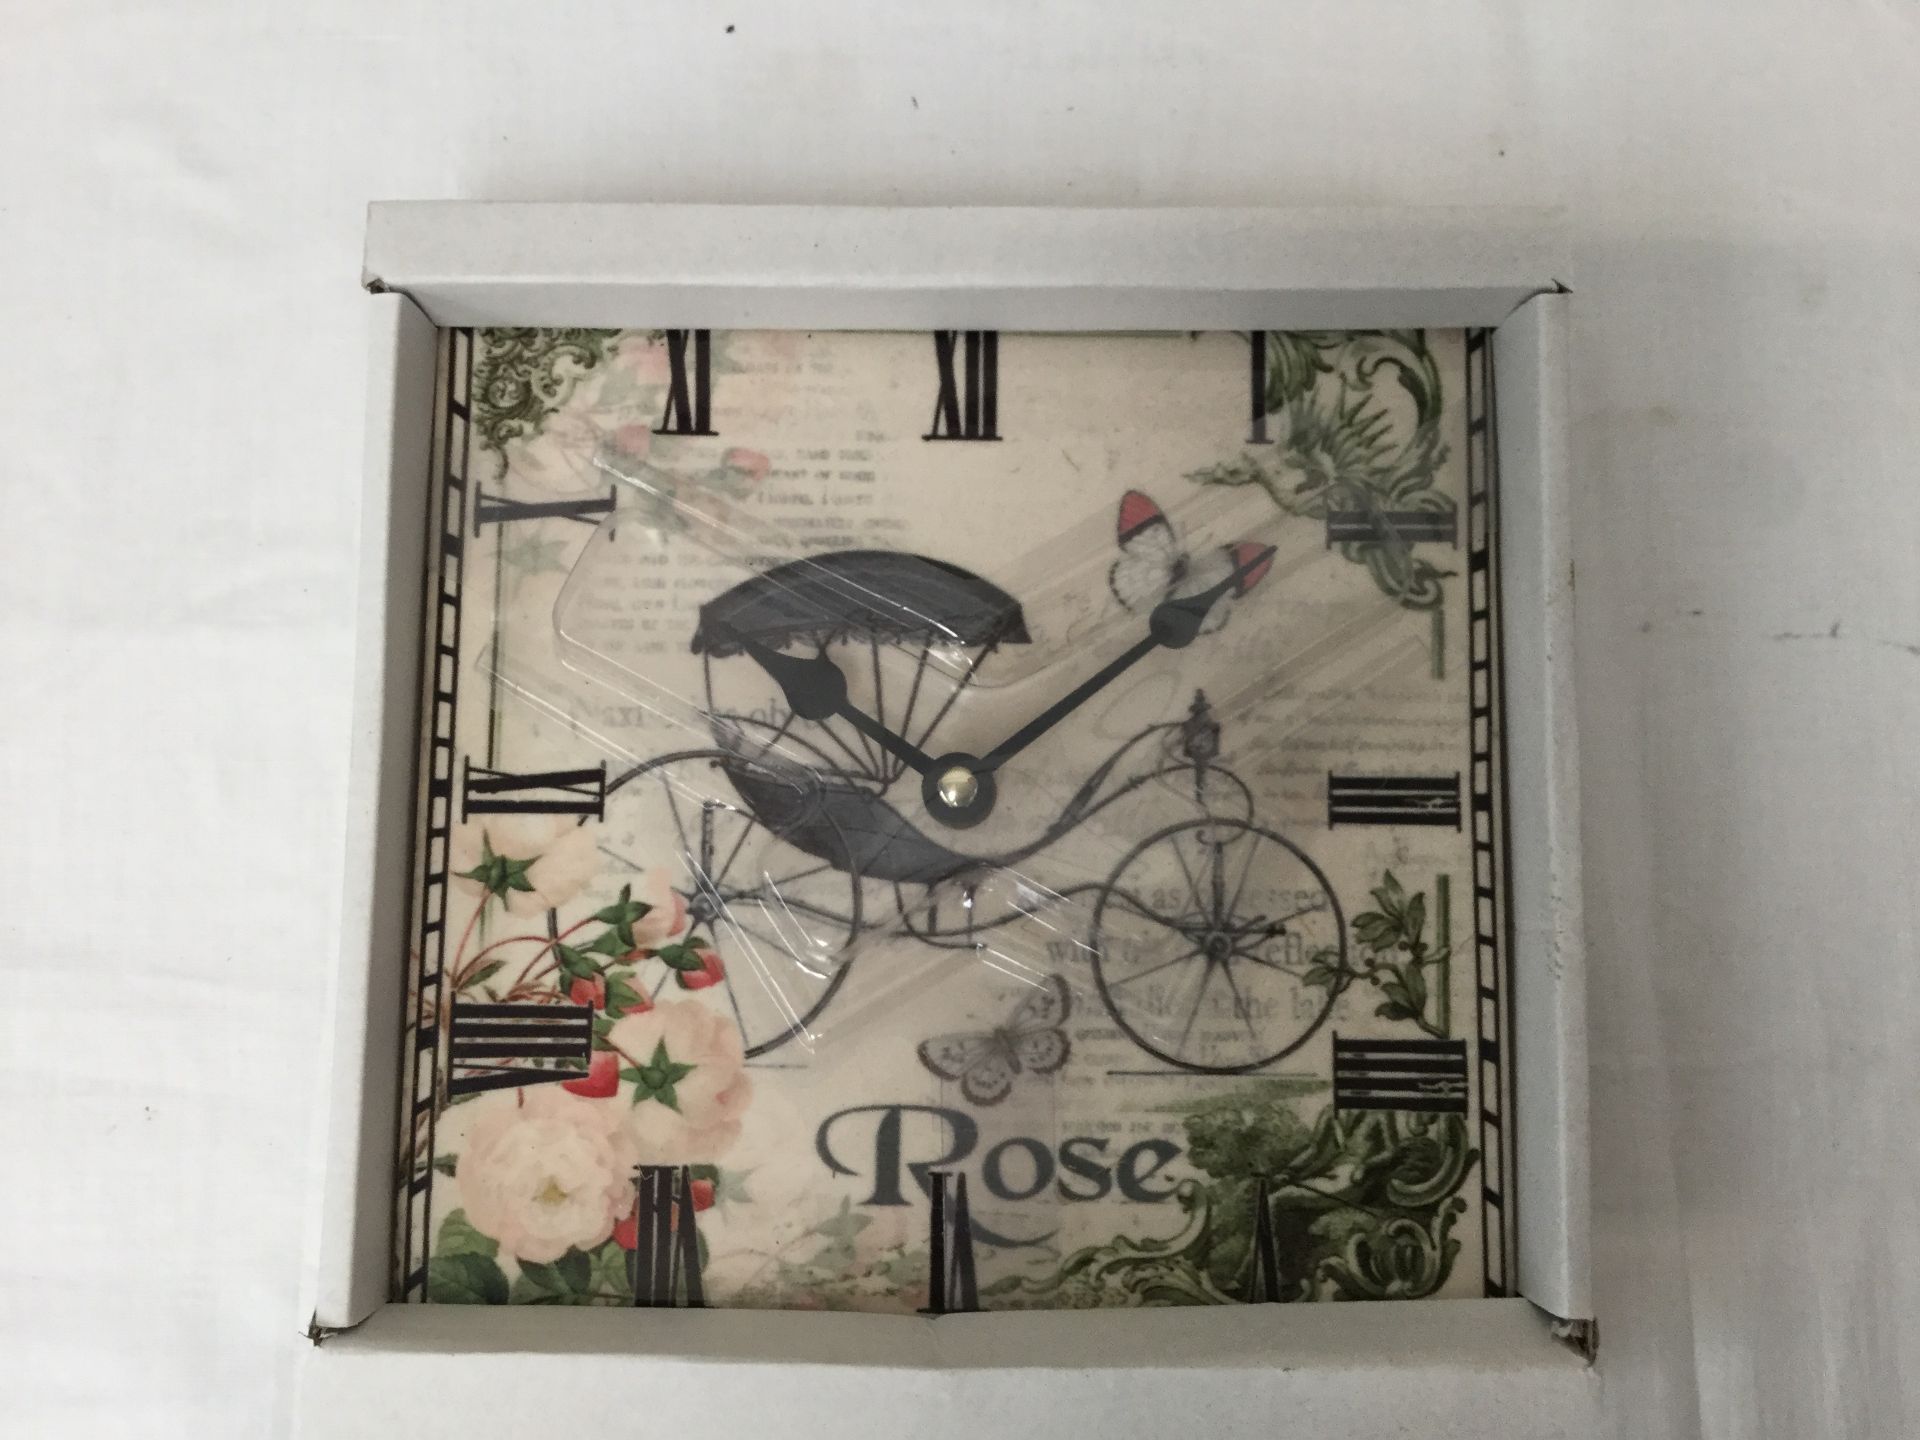 New Rose Small Tile Wall Clock Original Packaging